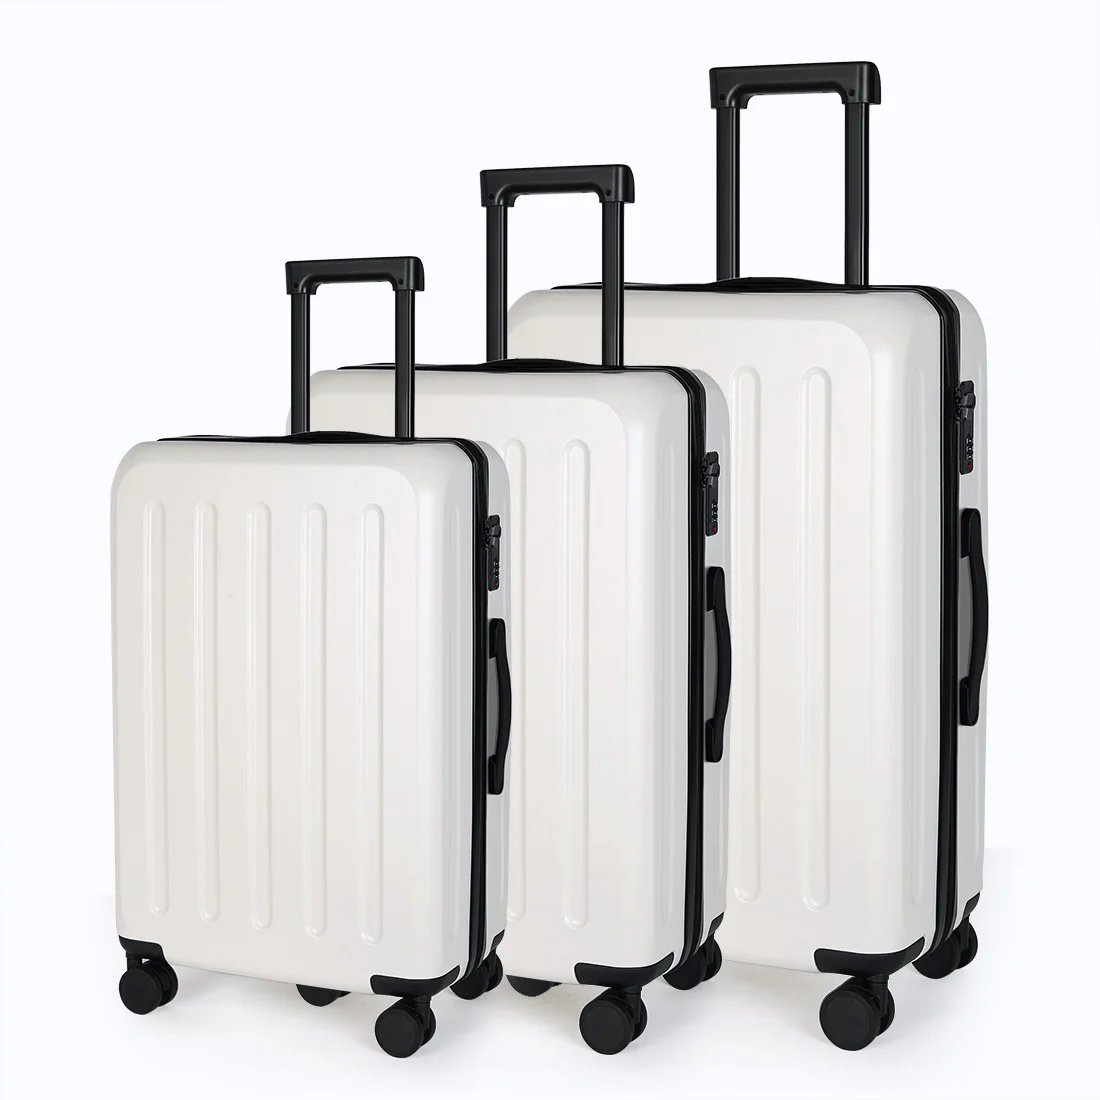 

Wholesale new hardside luggage valise de voyage 3 pcs suit case bags trolley travel ABS suitcase